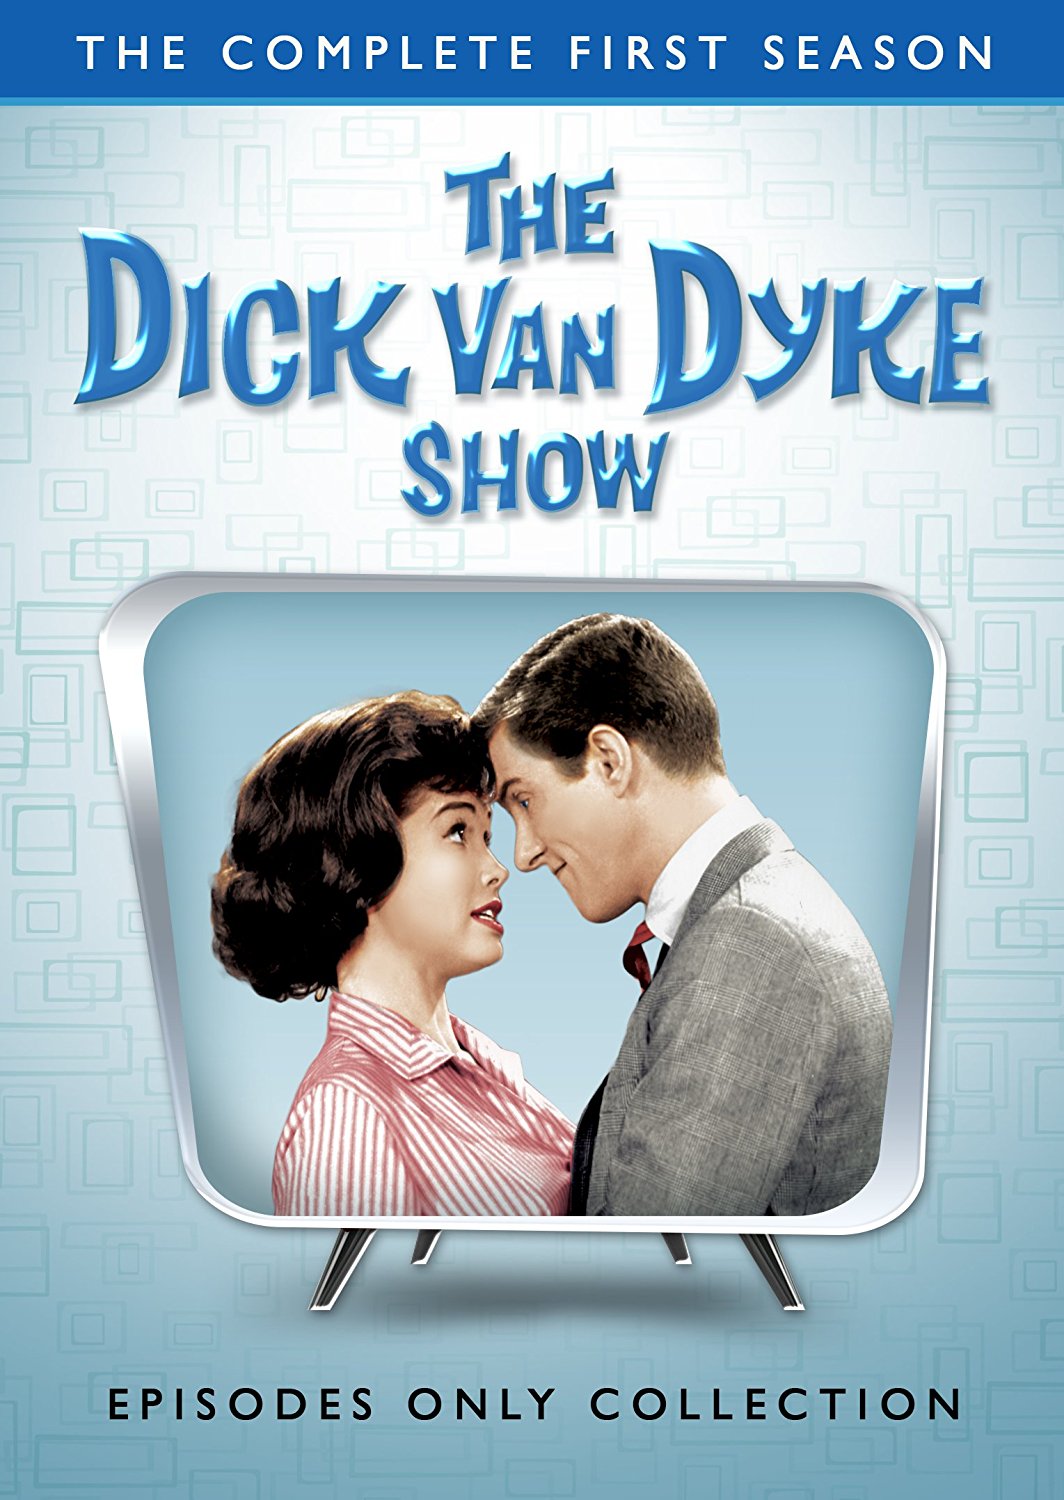 Dick va dyke show